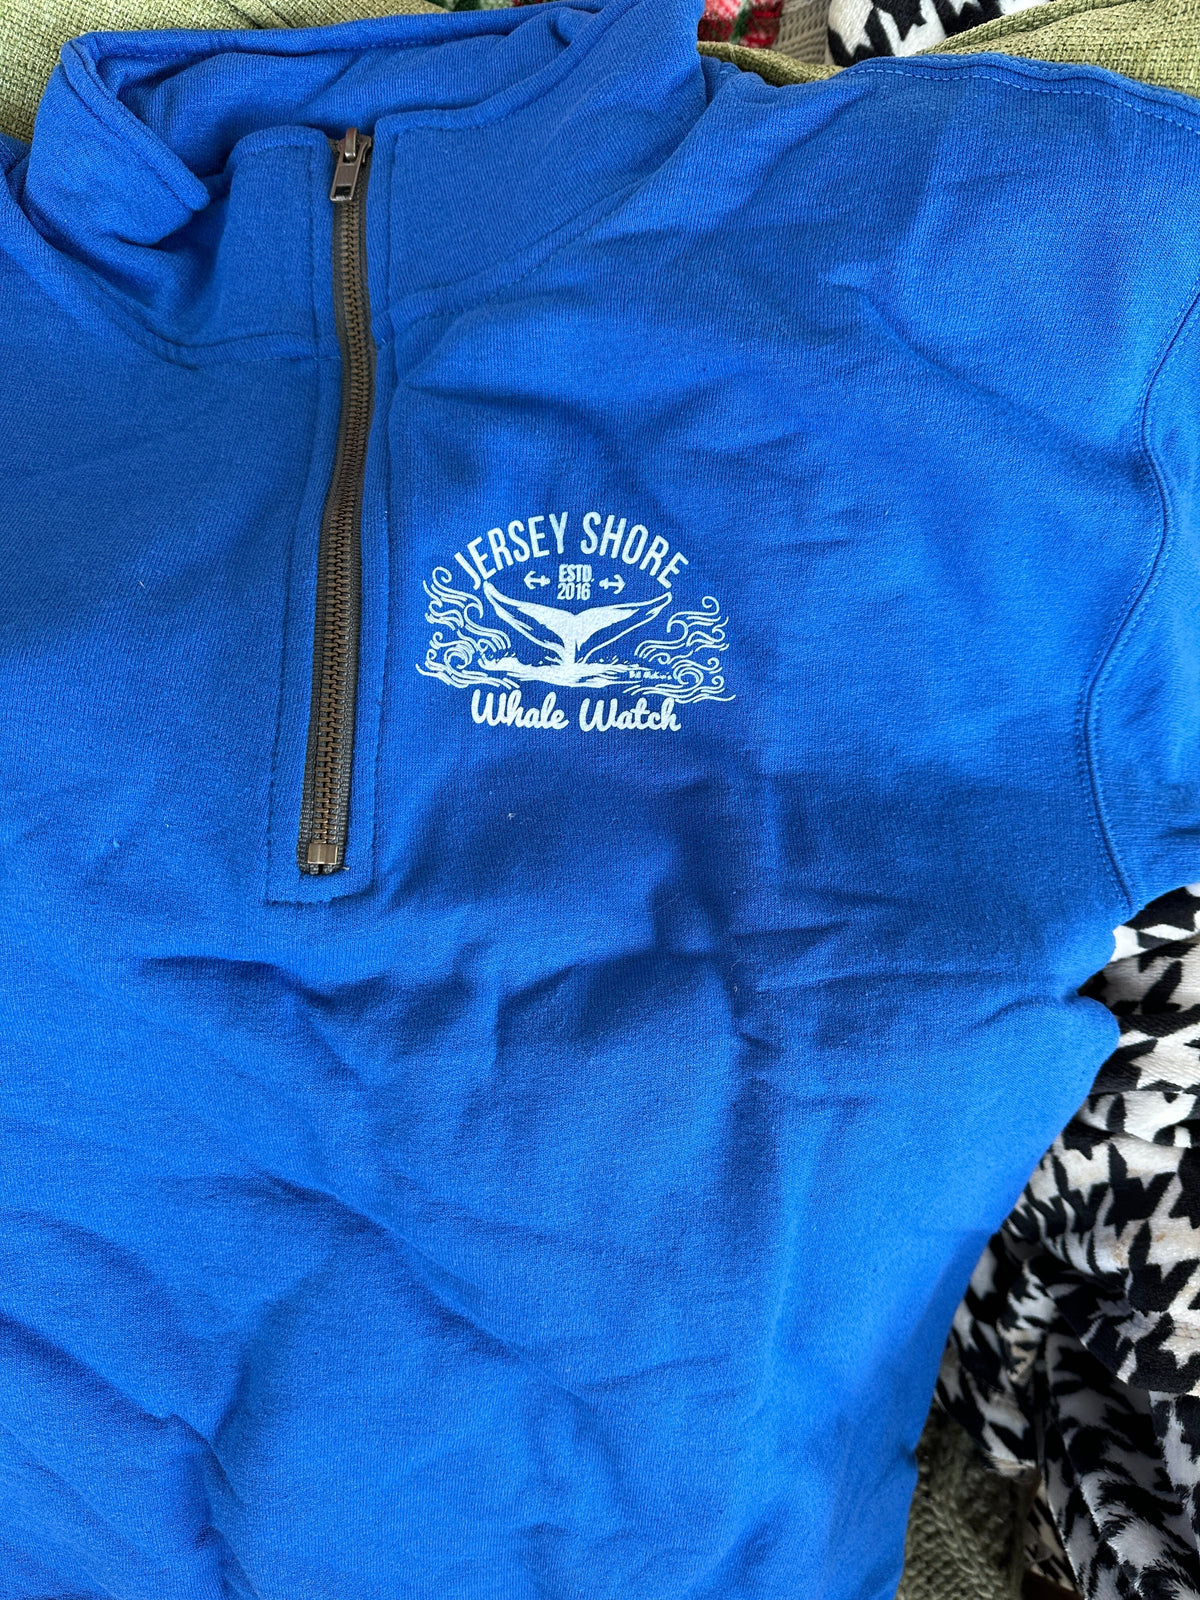 Flash Sale Classic Jersey Shore Whale Watch Sweatshirt printed both sides Bill McKim Photography Small 1/4 zipper Royal Blue 